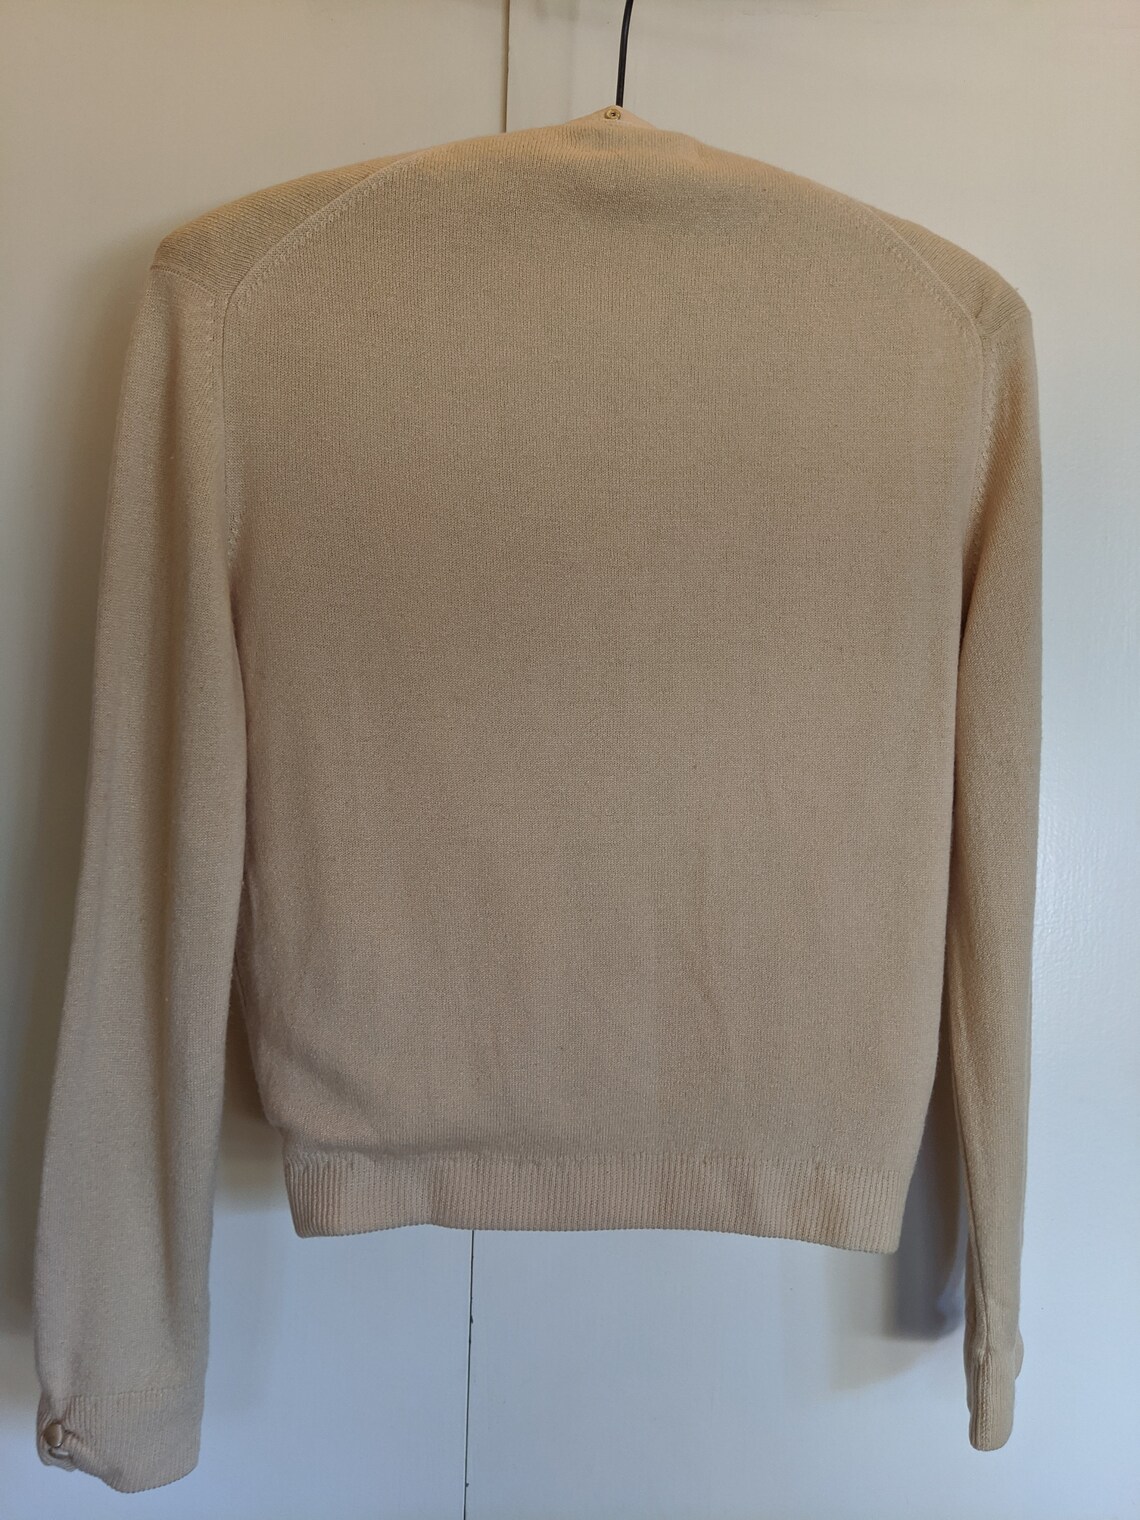 Vintage Cashmere Cardigan Sweater | Etsy